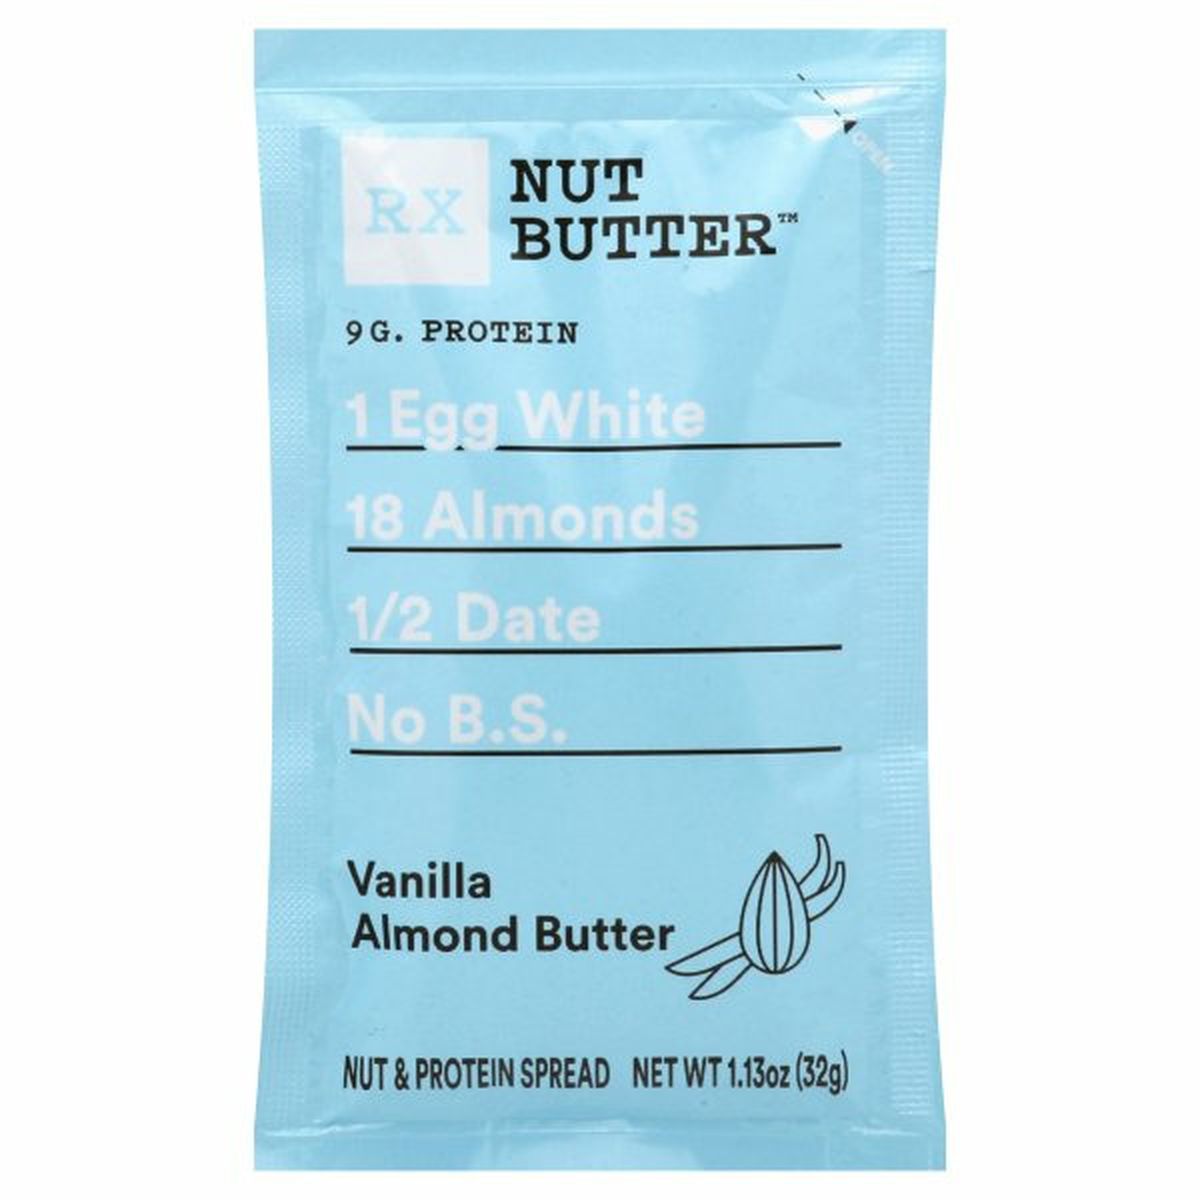 Calories in RXBAR RX Nut Butter Nut & Protein Spread, Vanilla Almond Butter